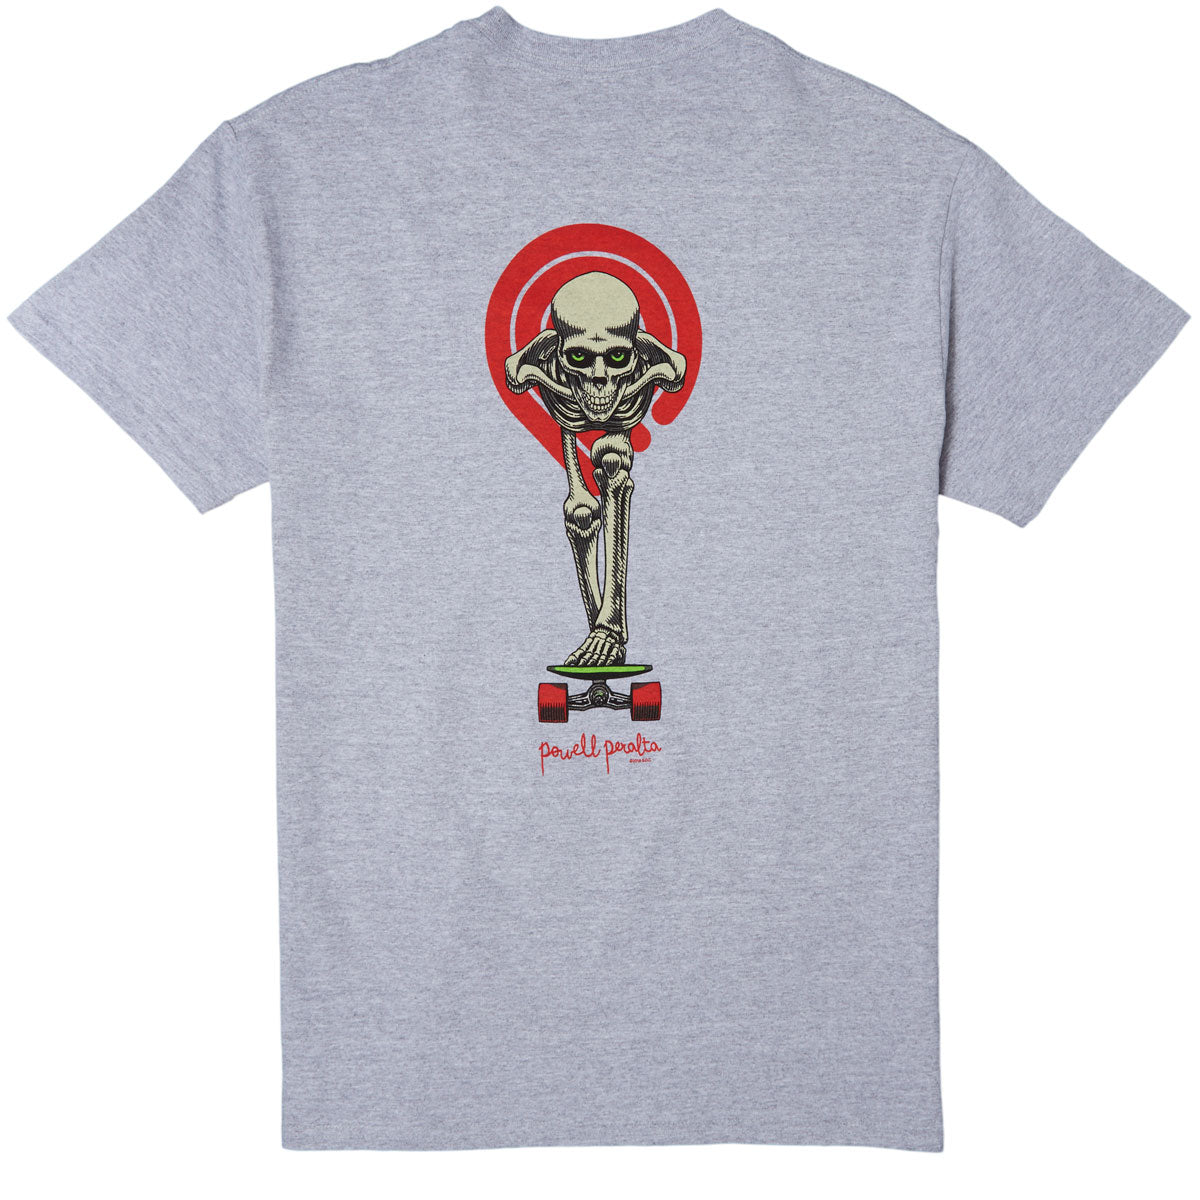 Powell-Peralta Tucking Skeleton T-Shirt - Sport Grey image 1